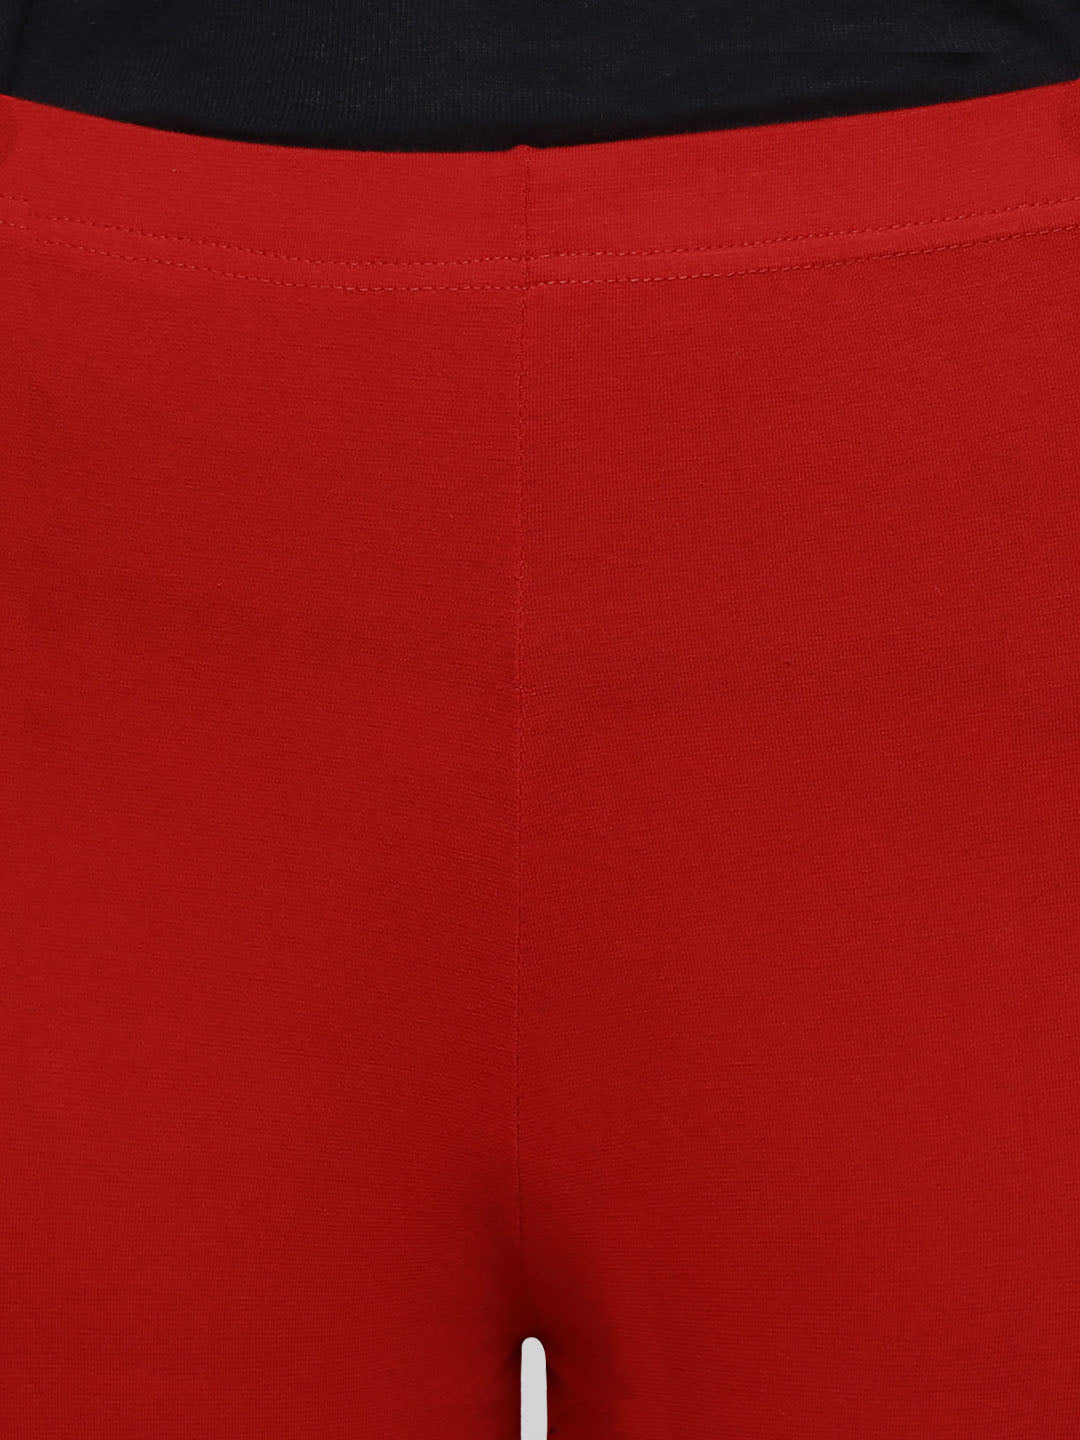 Saundarya Women's Red Calf Length Leggings Cotton